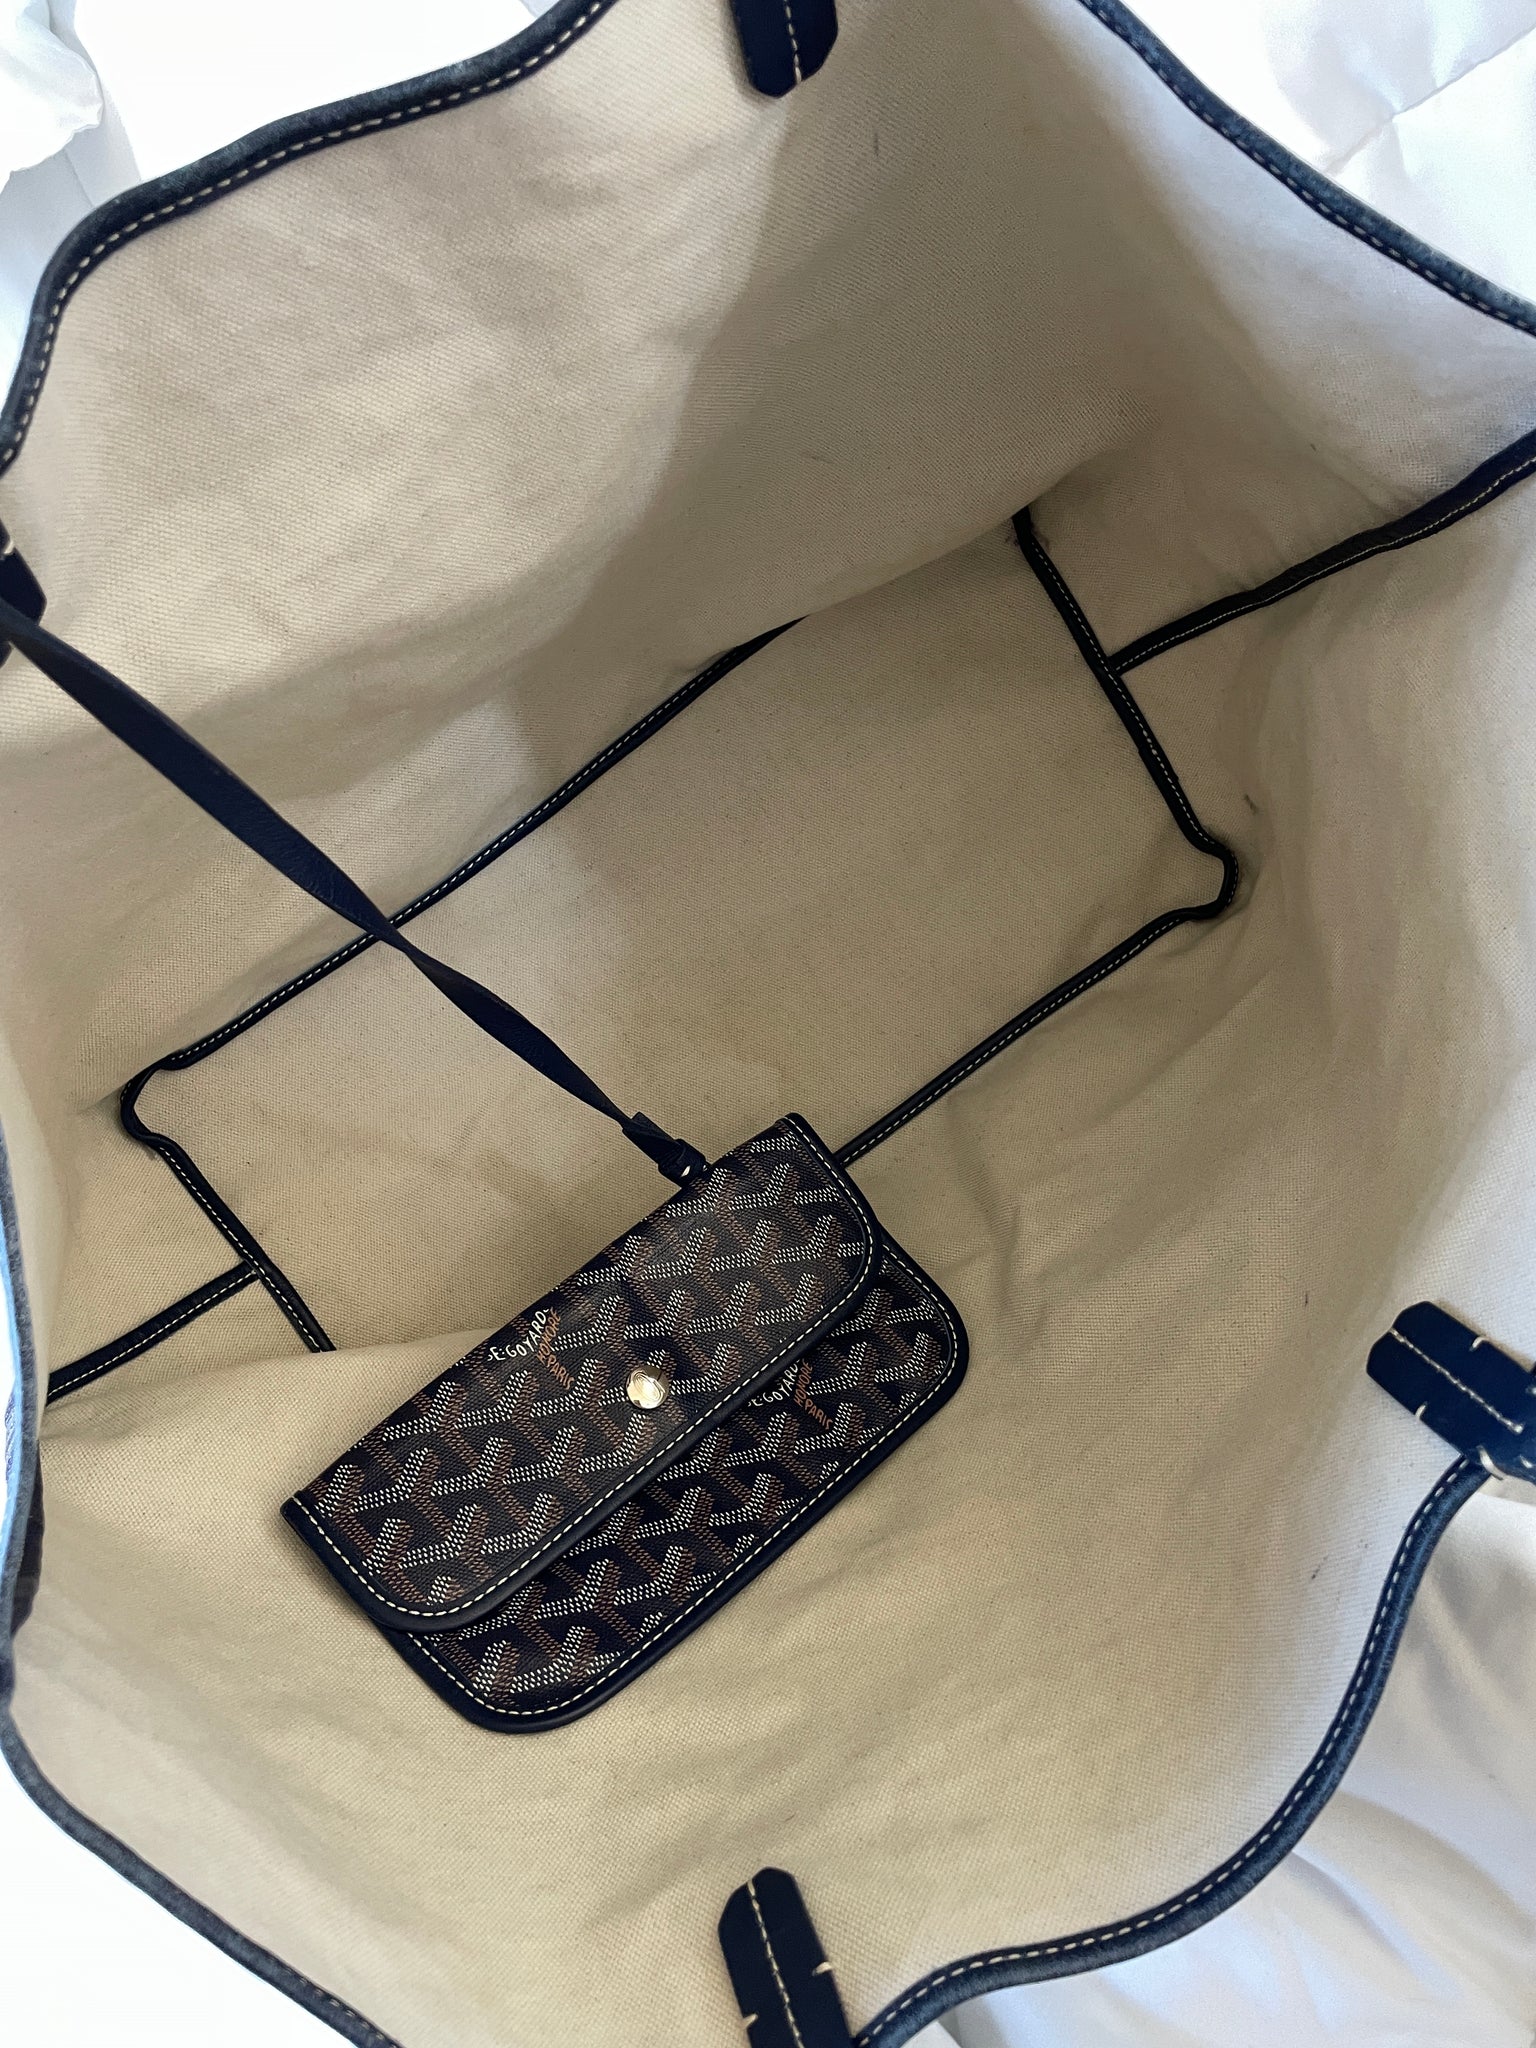 authentic goyard bag inside